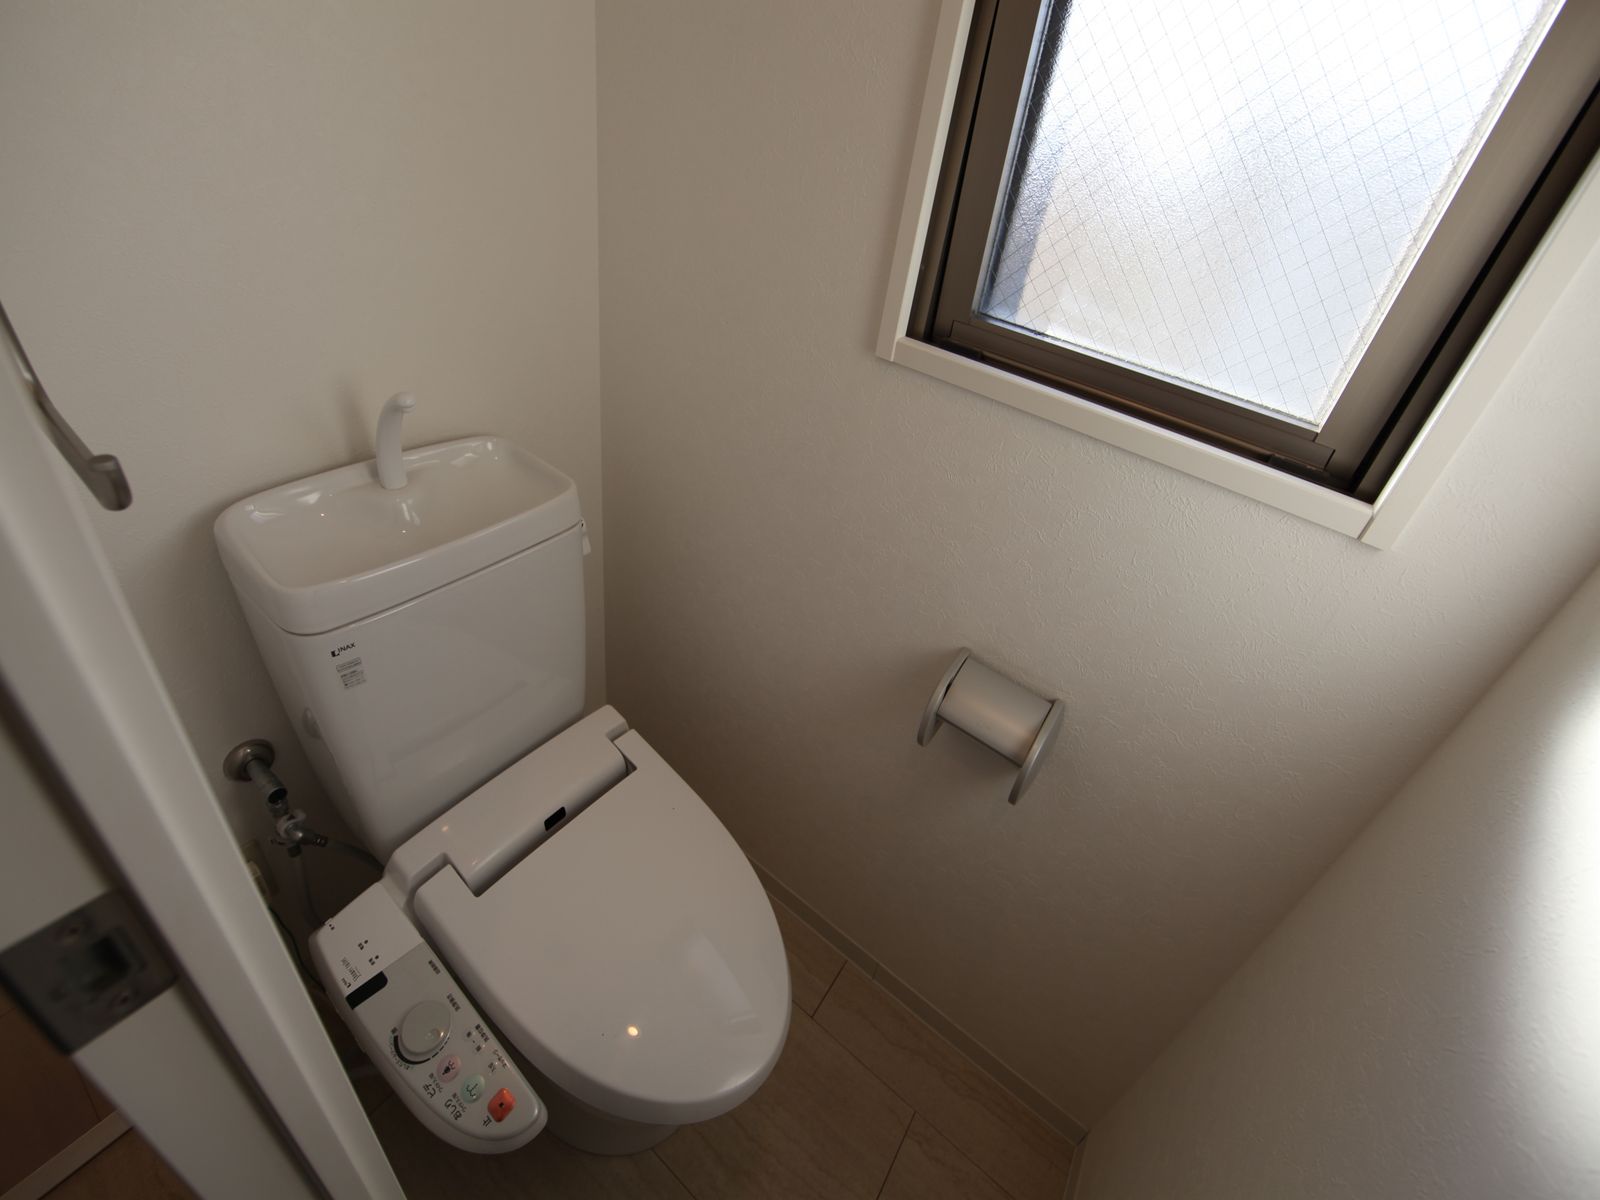 Toilet. toilet Warm water washing toilet seat mounted Allowed With windows (ventilation good)